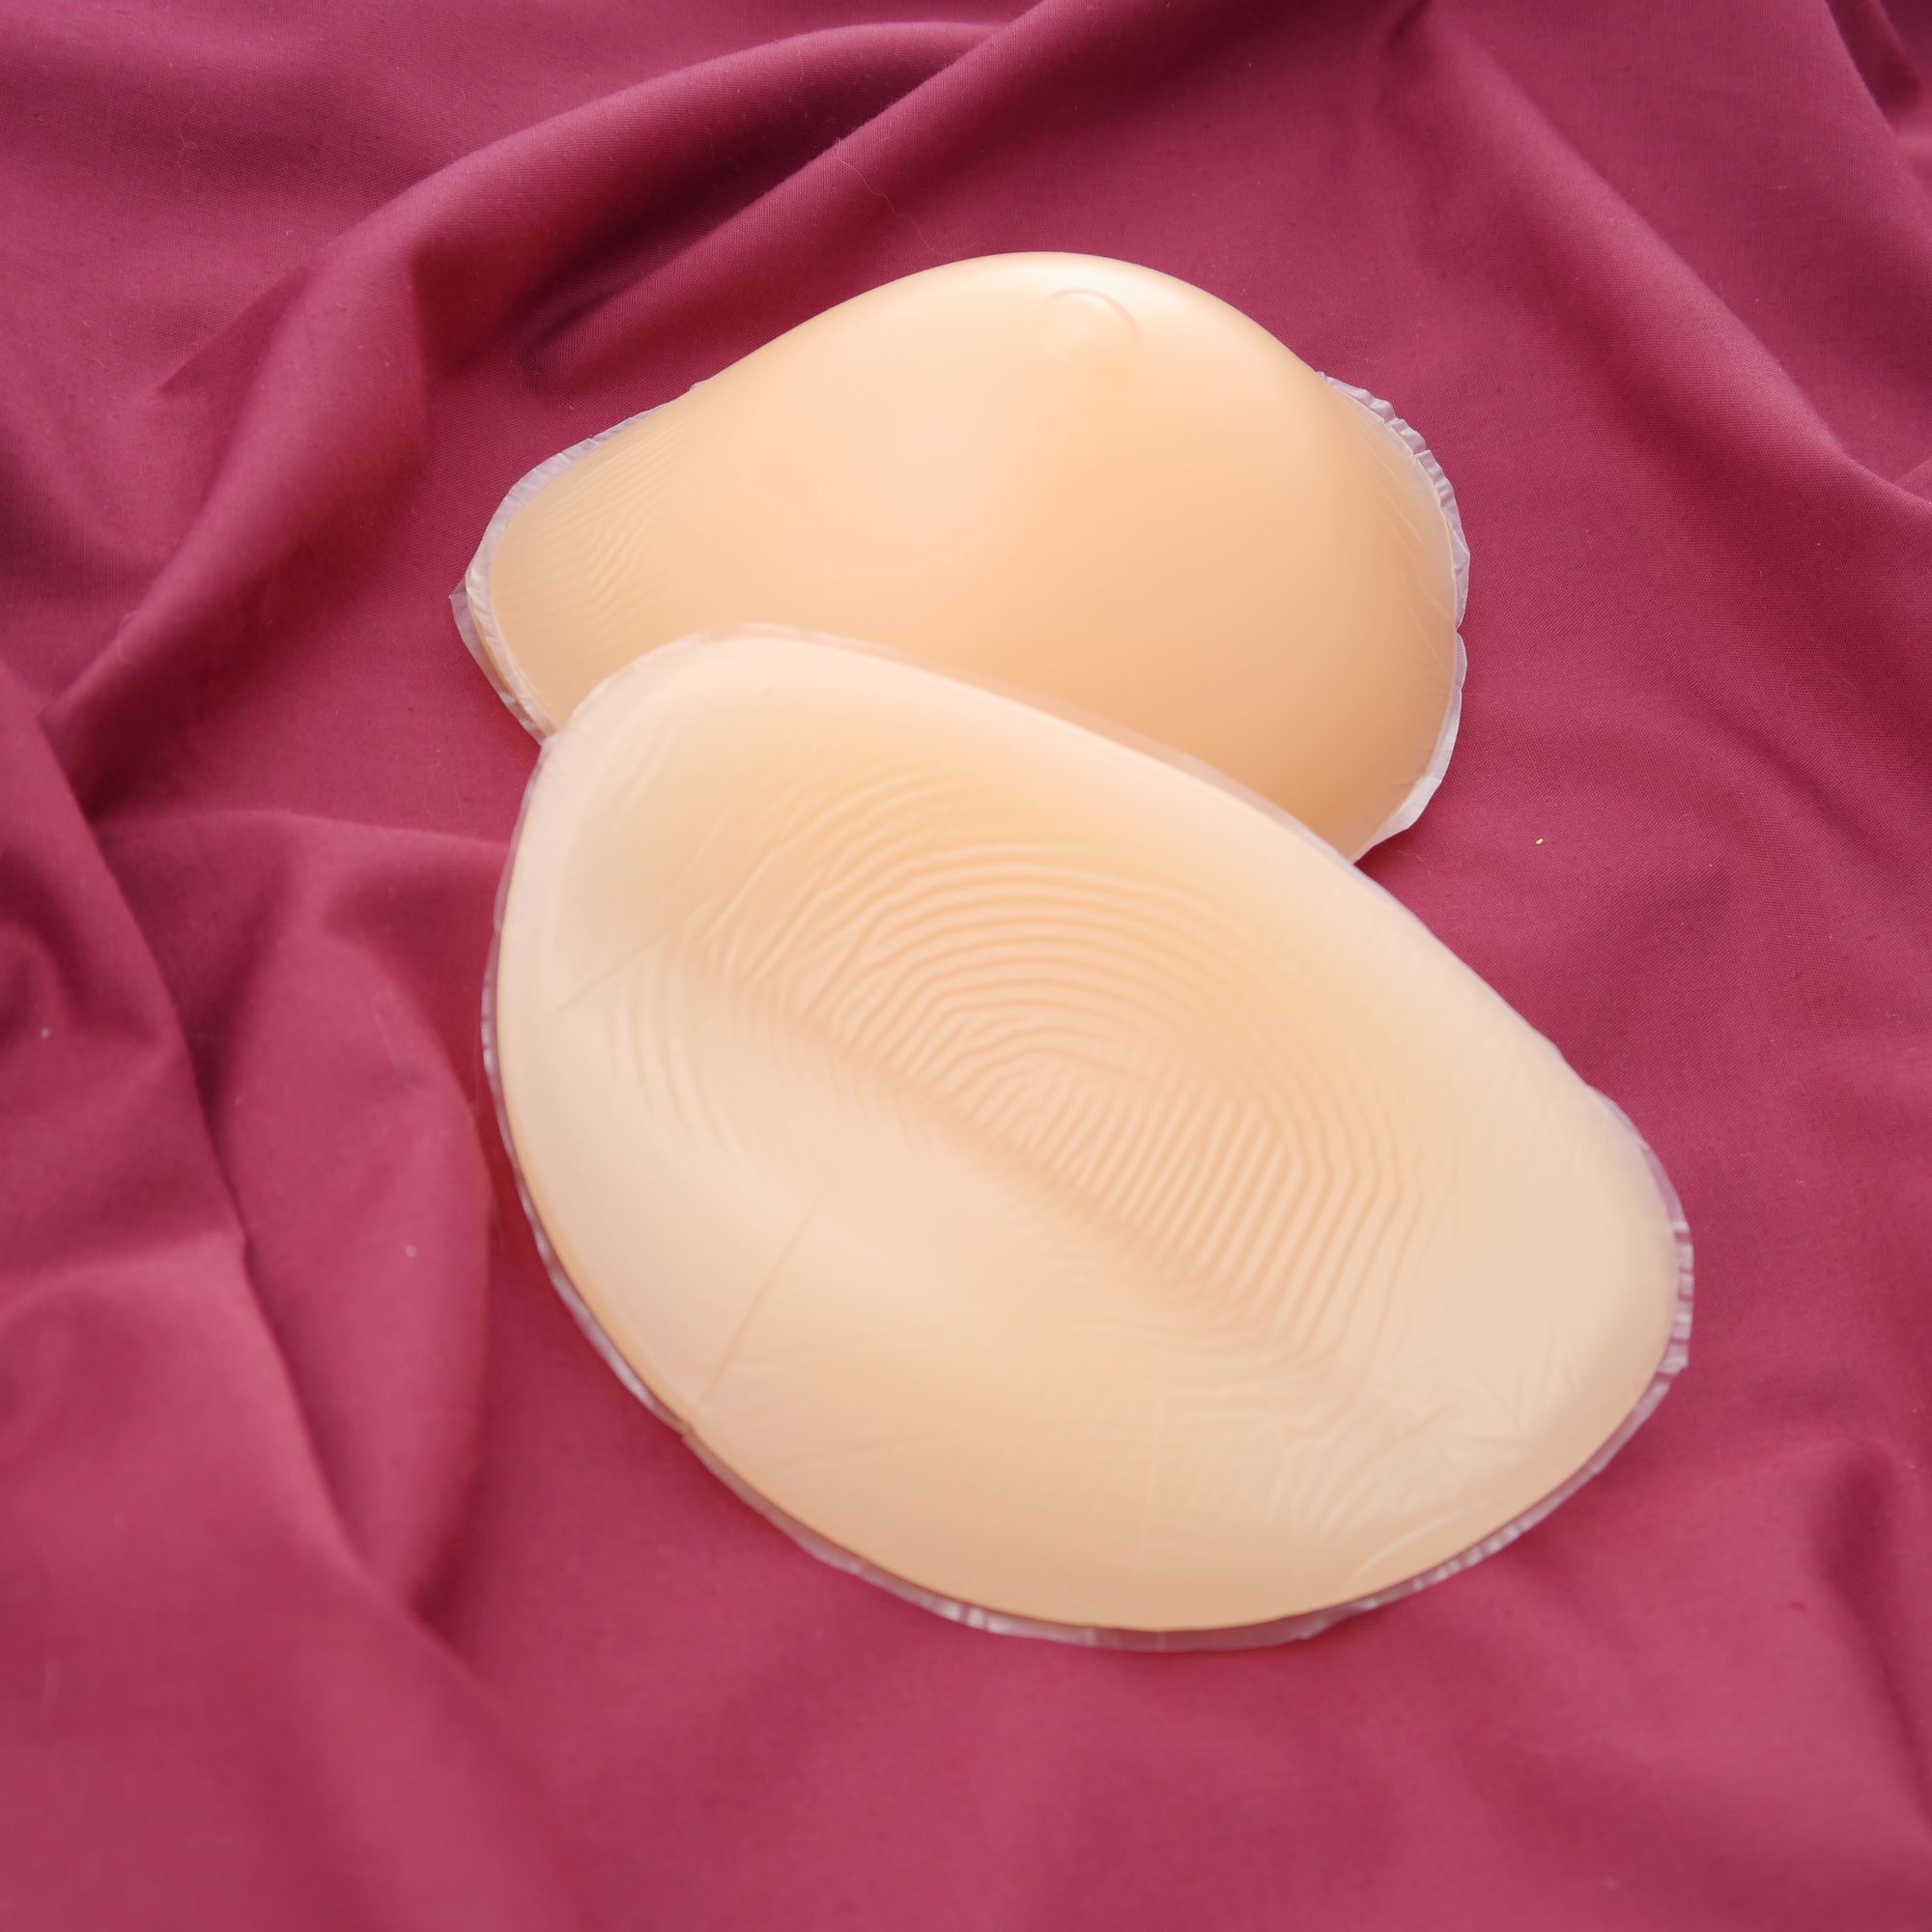 Gel Breast Enhancers - the softest chicken fillets in our range